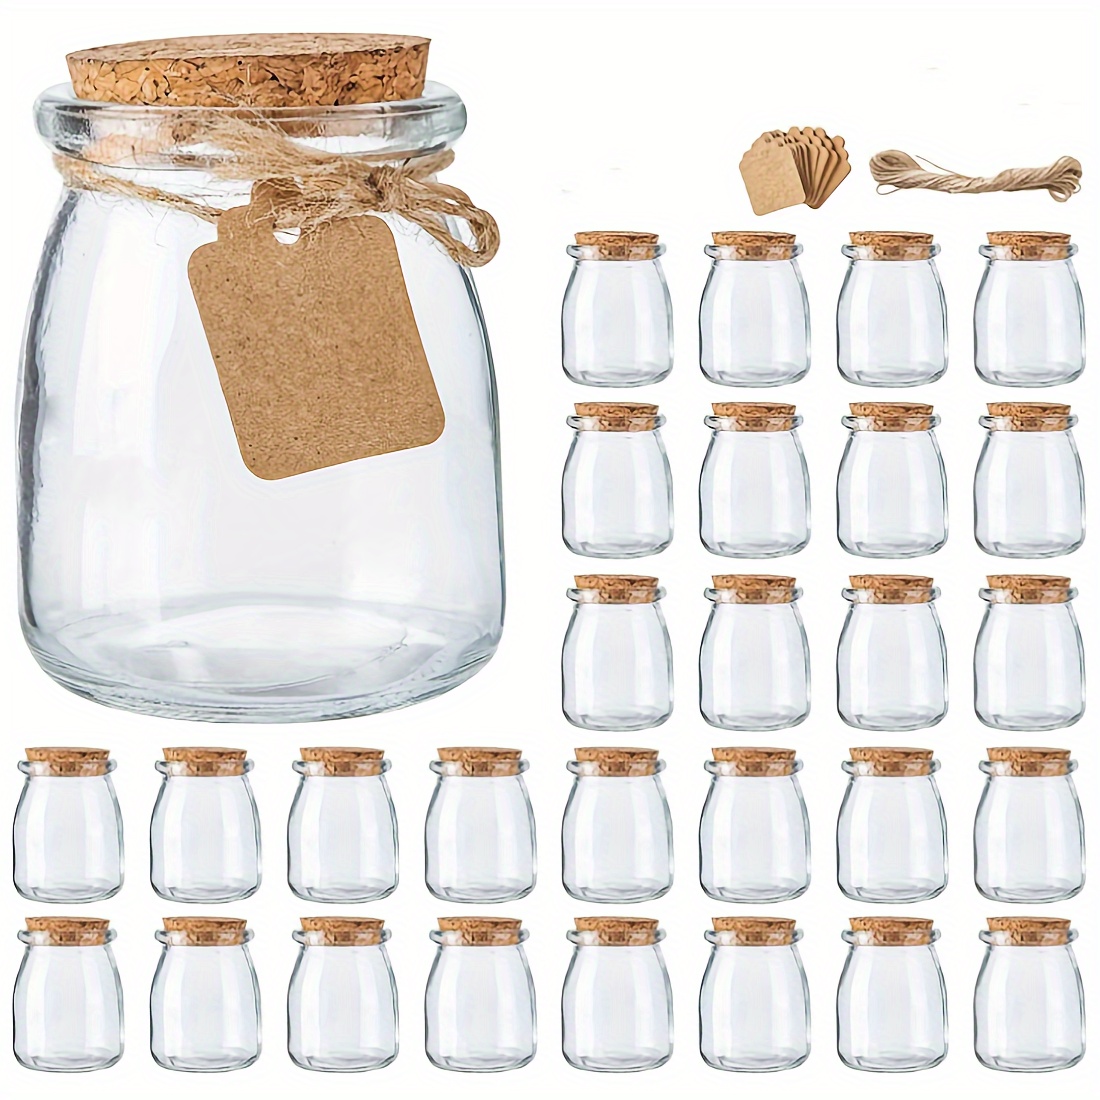 60PCS Small Glass Jars with Lids,1.5oz Mini Honey Jars,Candle Jar